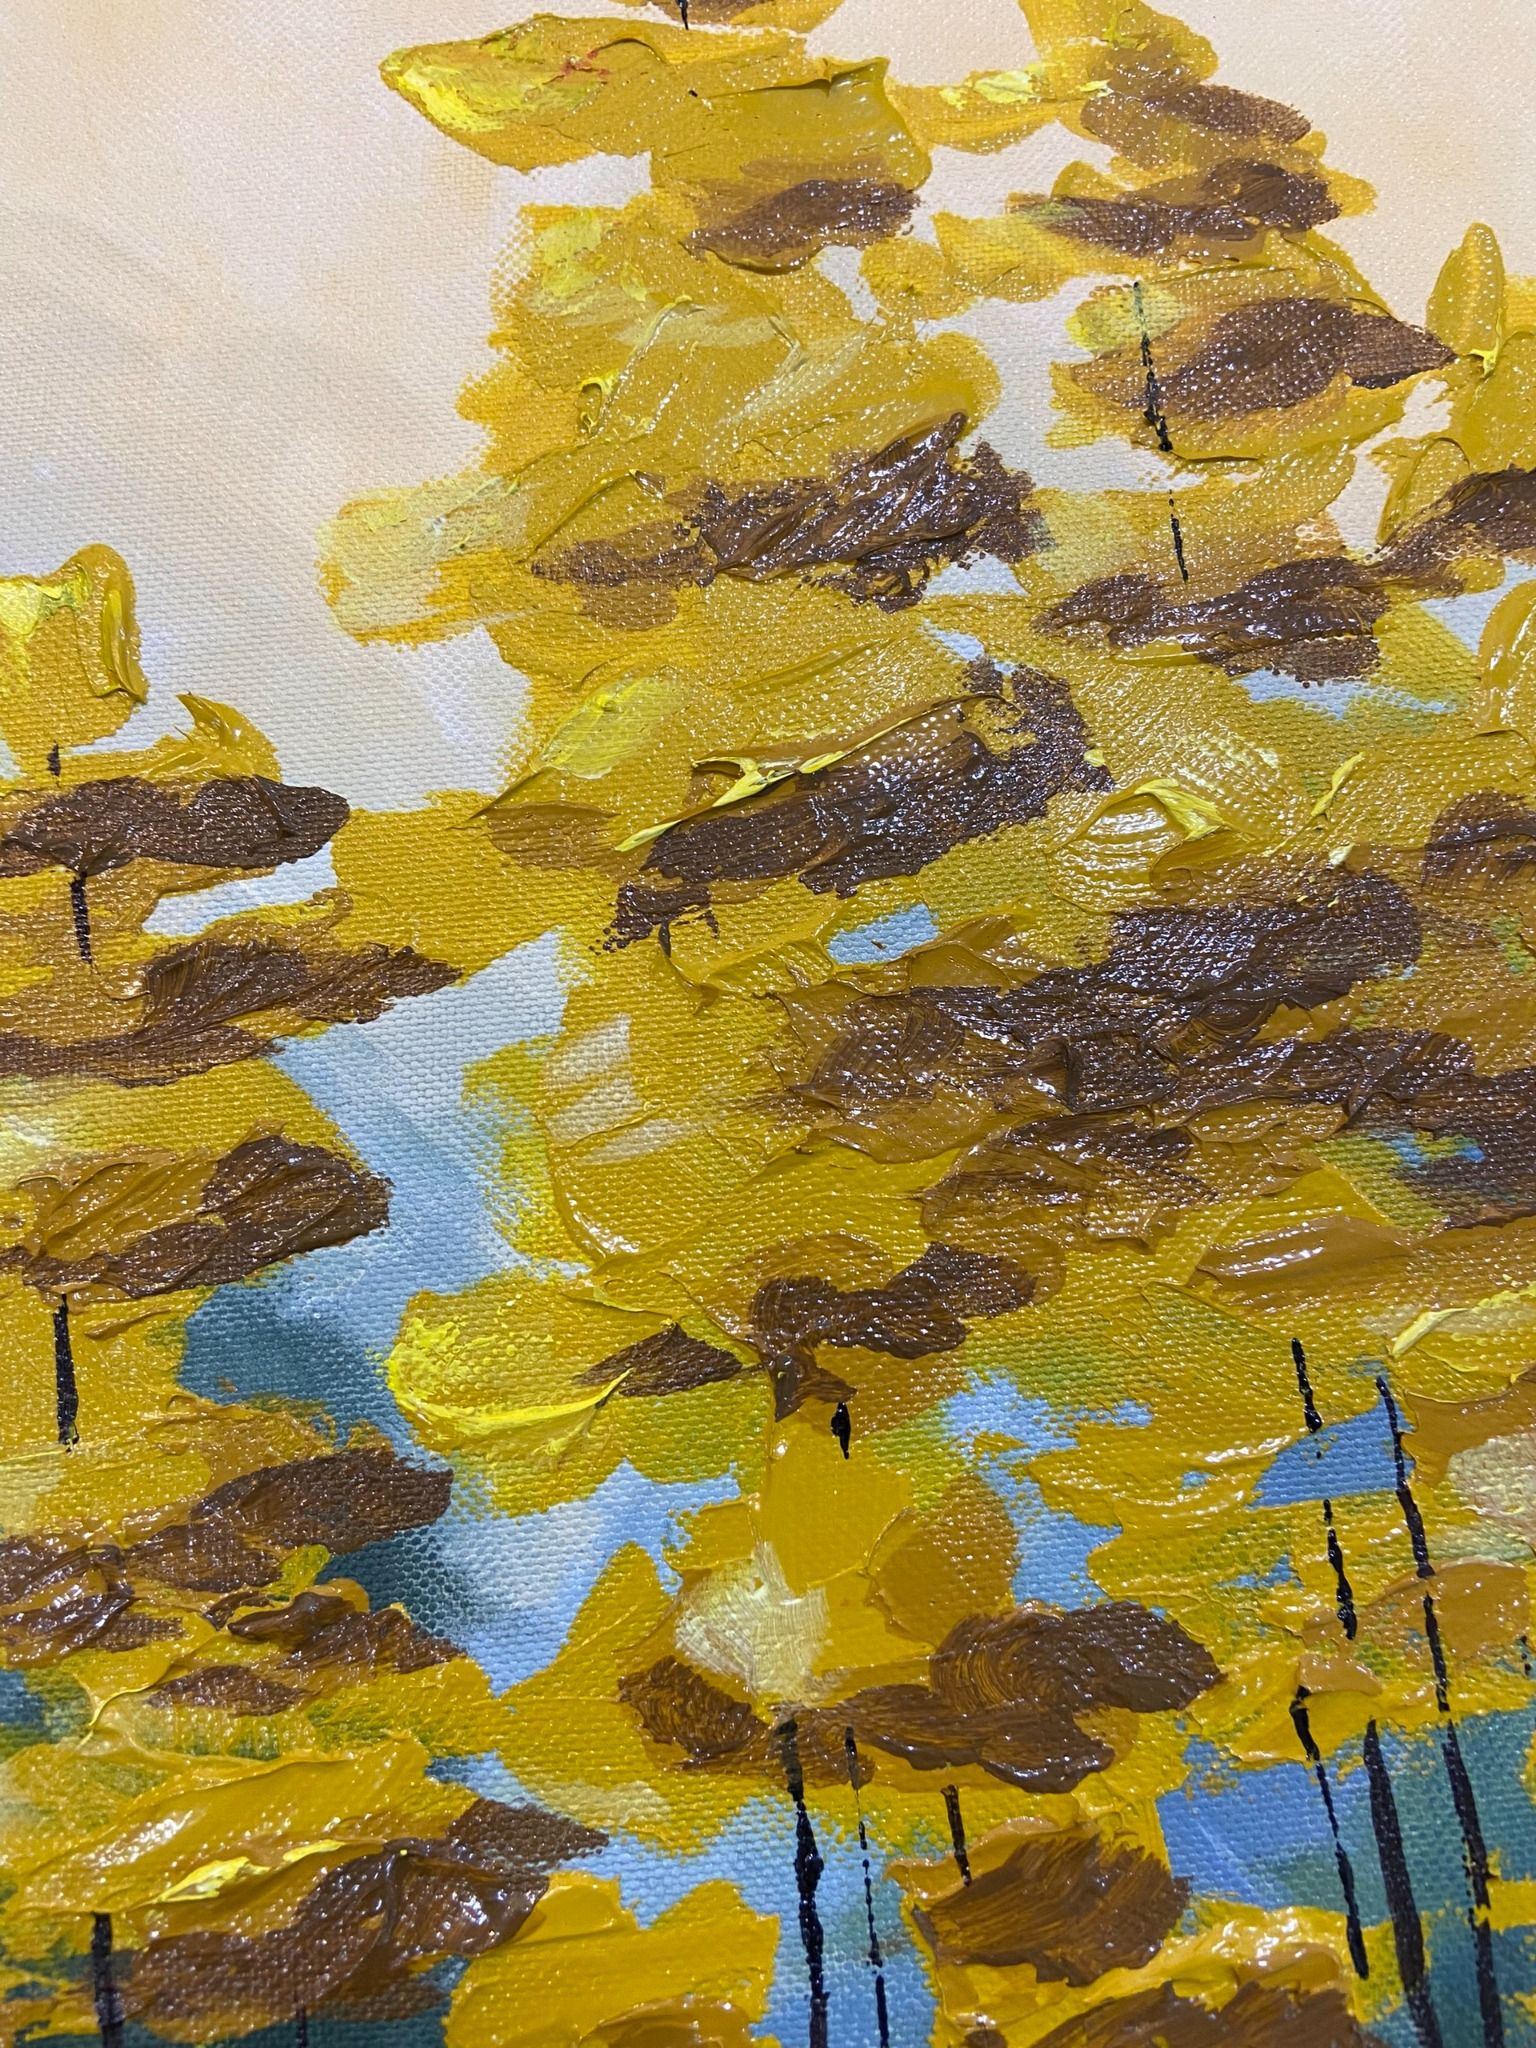  Tranh Acrylic - Forest 1-2  - 40x60 cm 